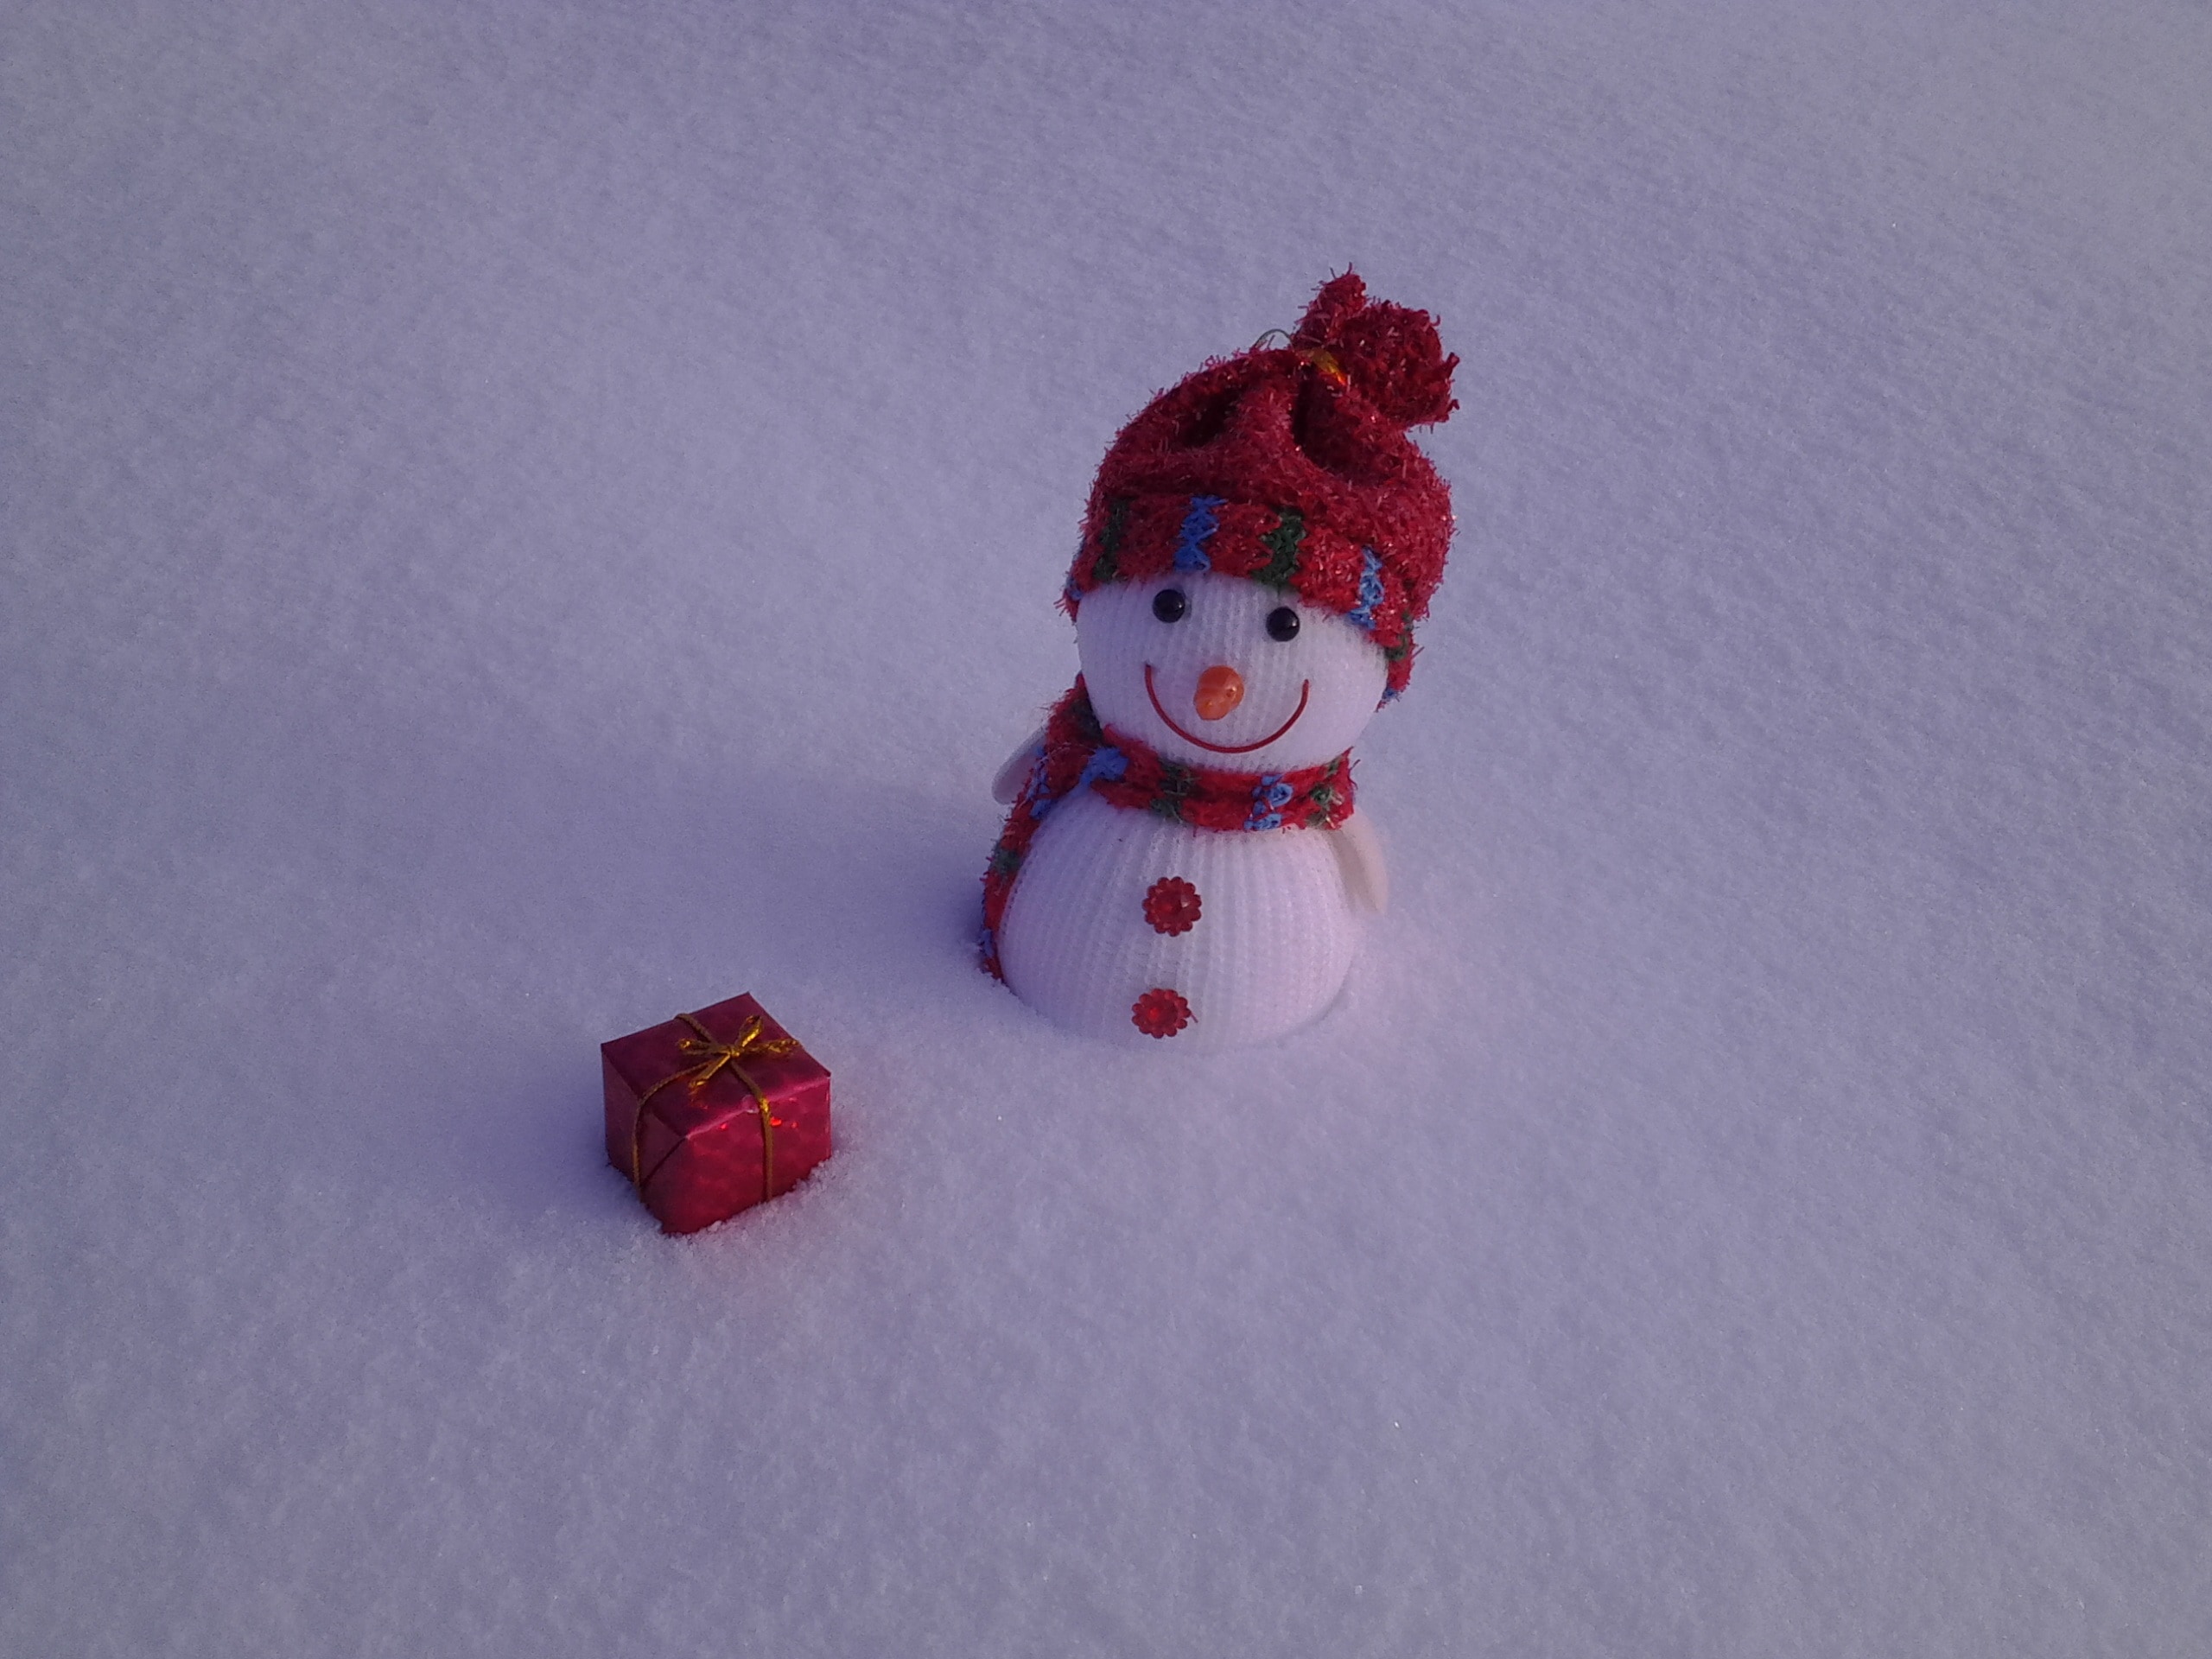 snowman amigurumi and red gift box miniature